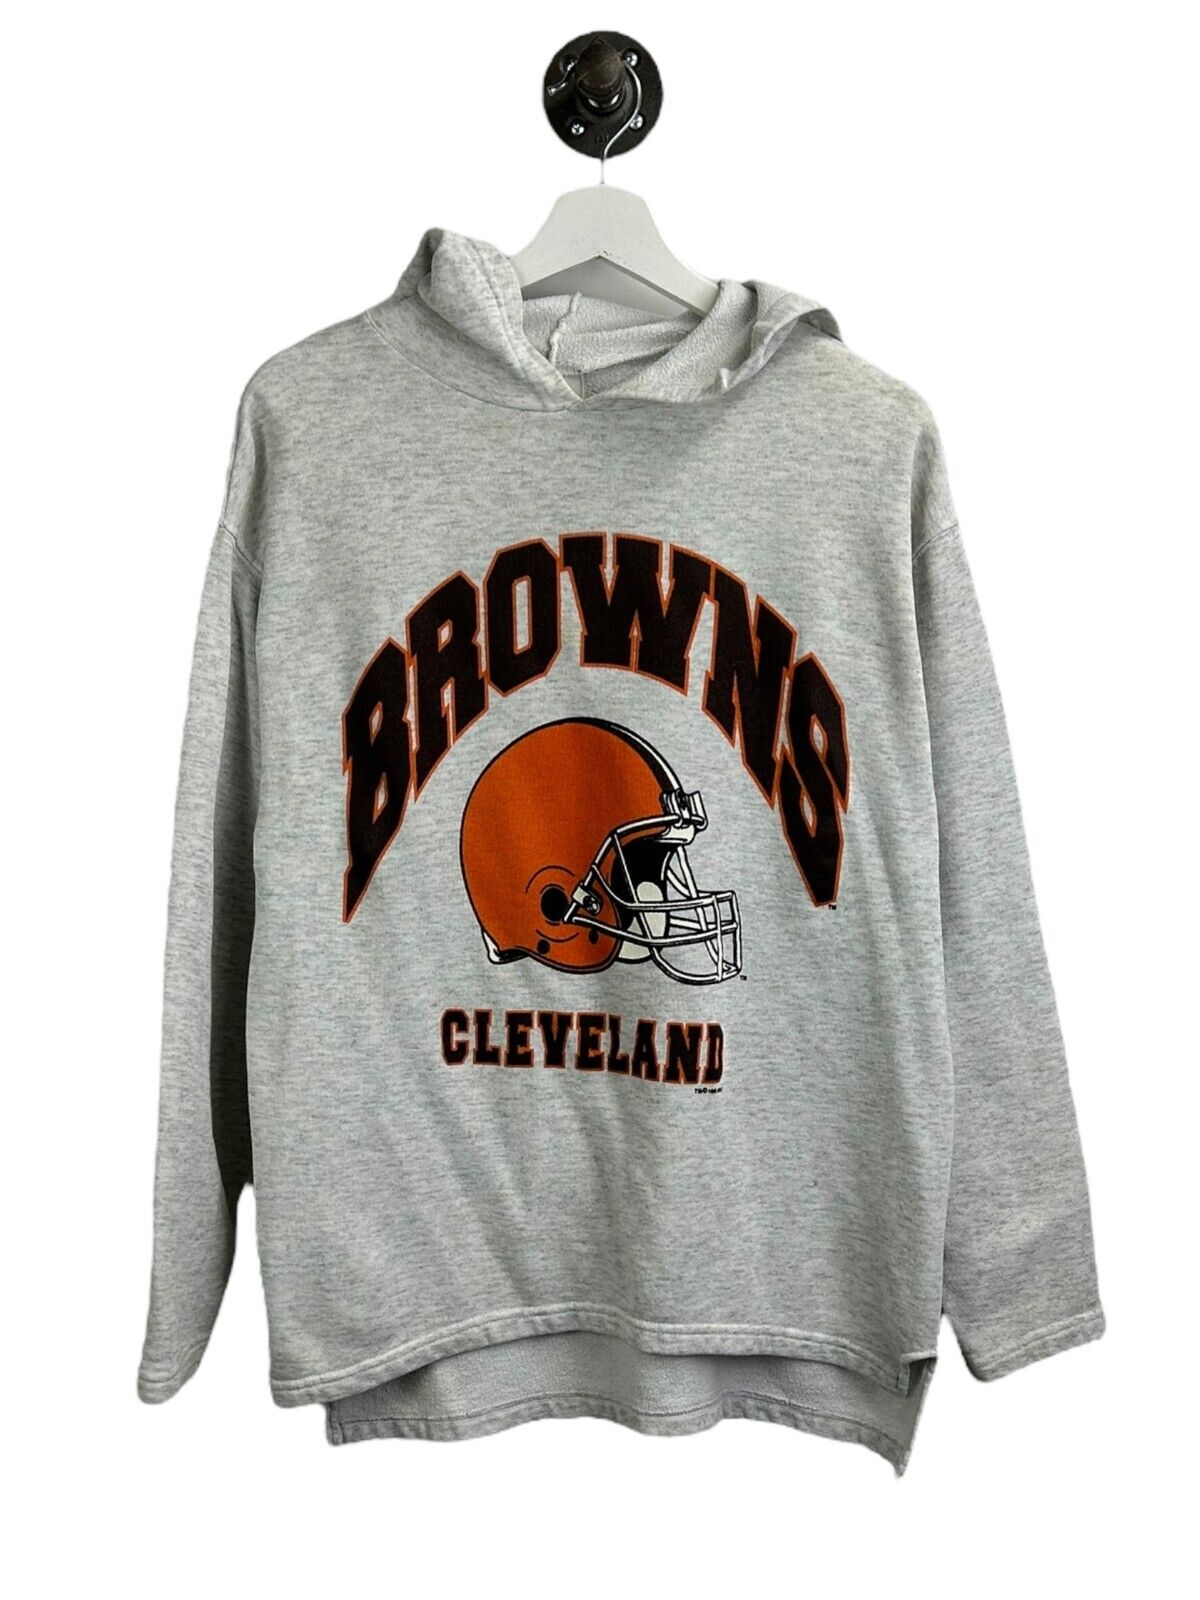 Vintage 1998 Cleveland Browns NFL Spellout Helmet Hooded Sweatshirt Size Medium